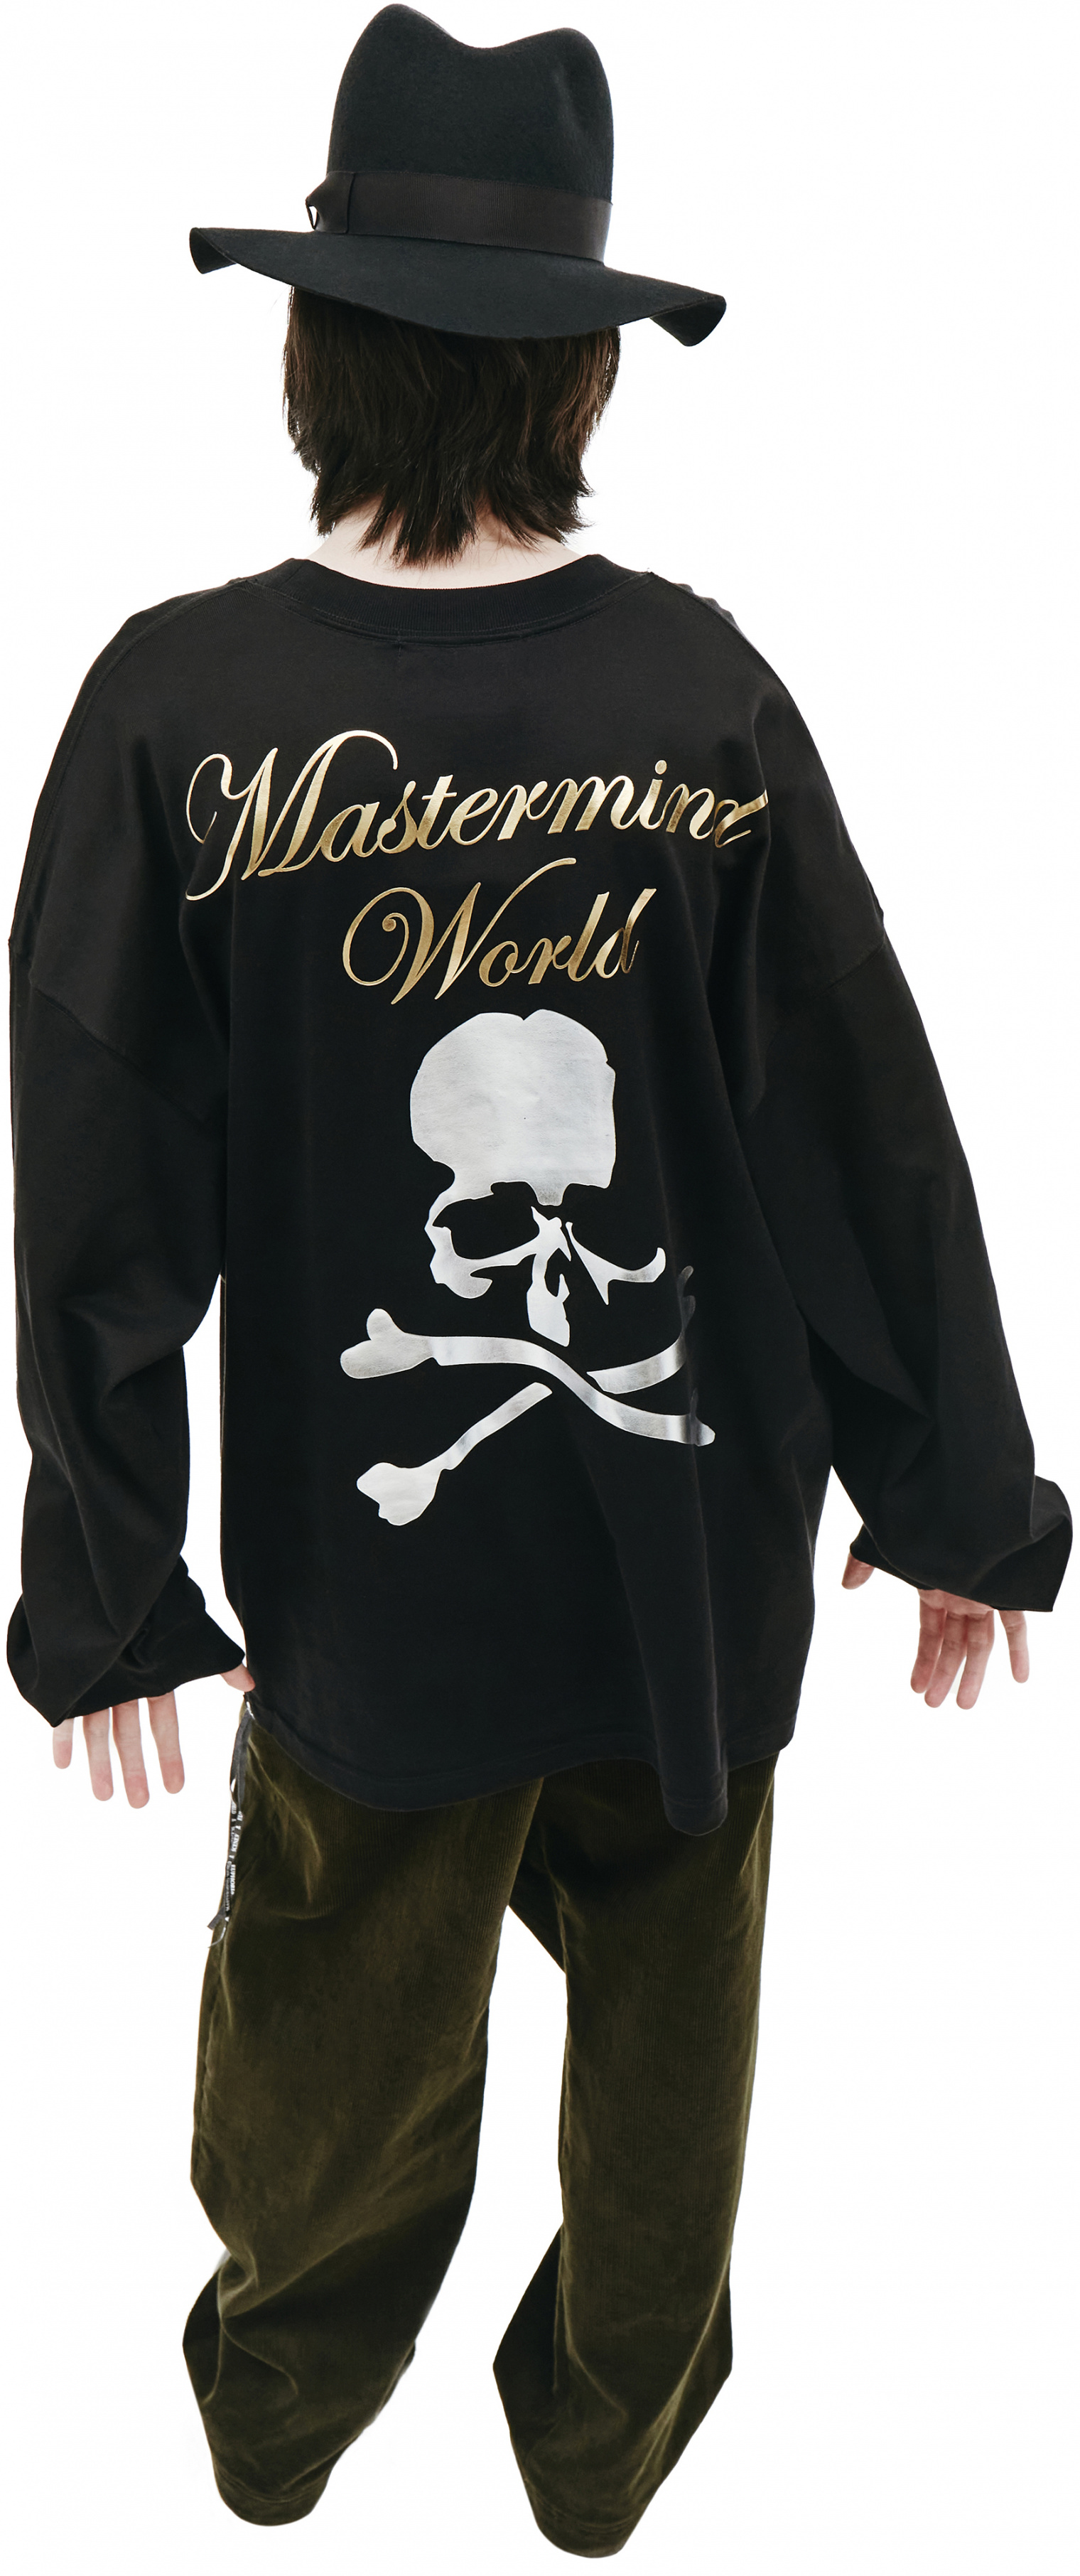 Mastermind WORLD Black Cotton Printed L/S T-shirt